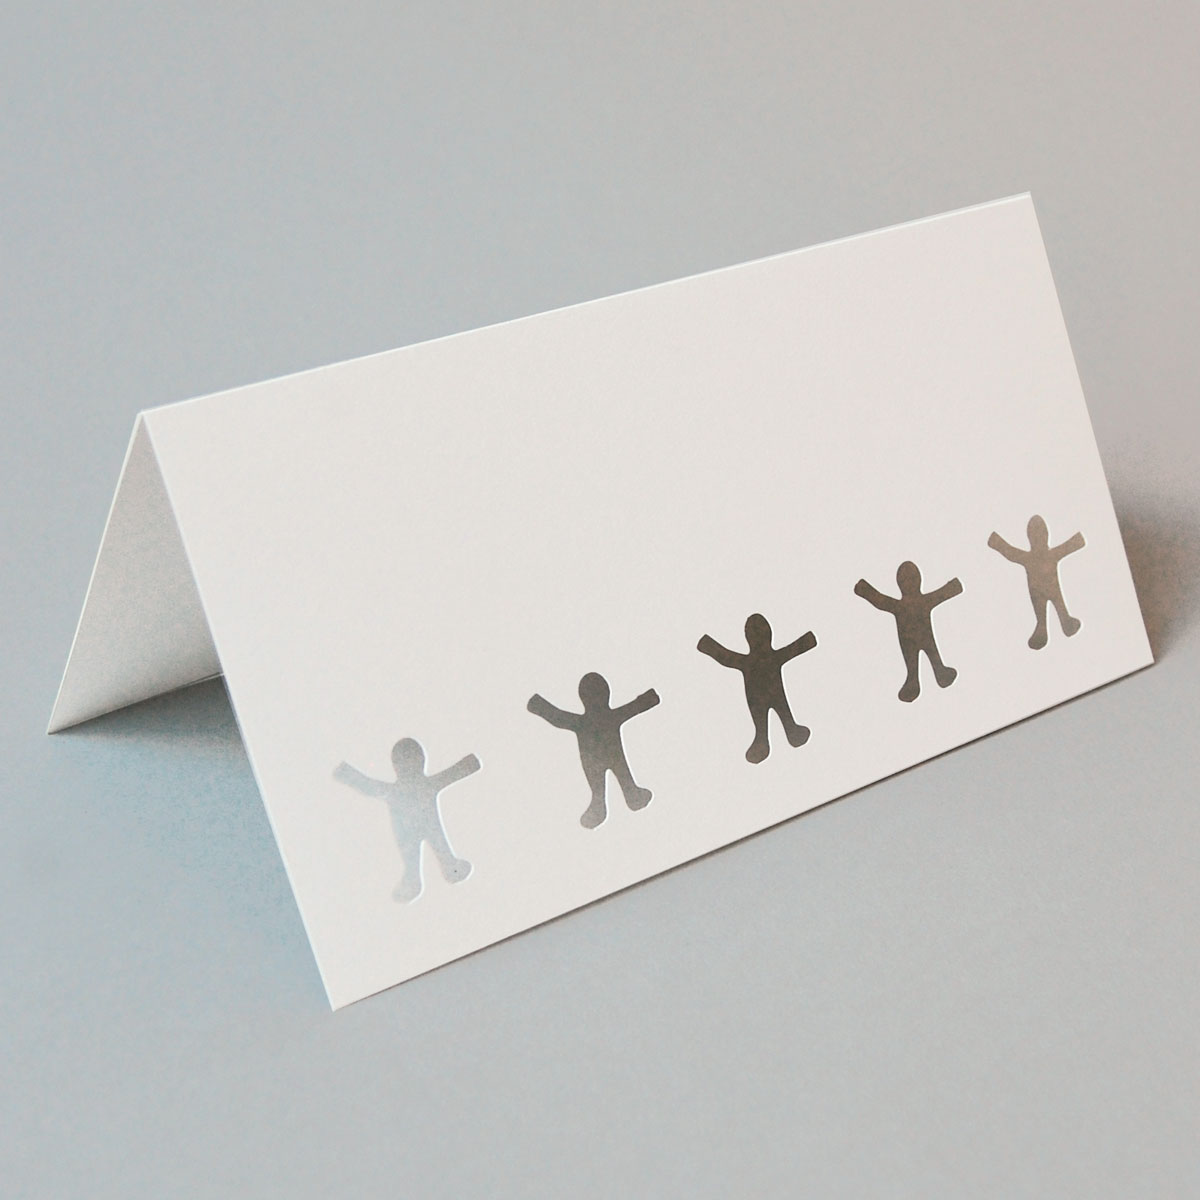 Recycling-Glückwunschkarten aus RecyCard 250 g/qm aus 100% Altpapier mit fünf gestanzten Figuren